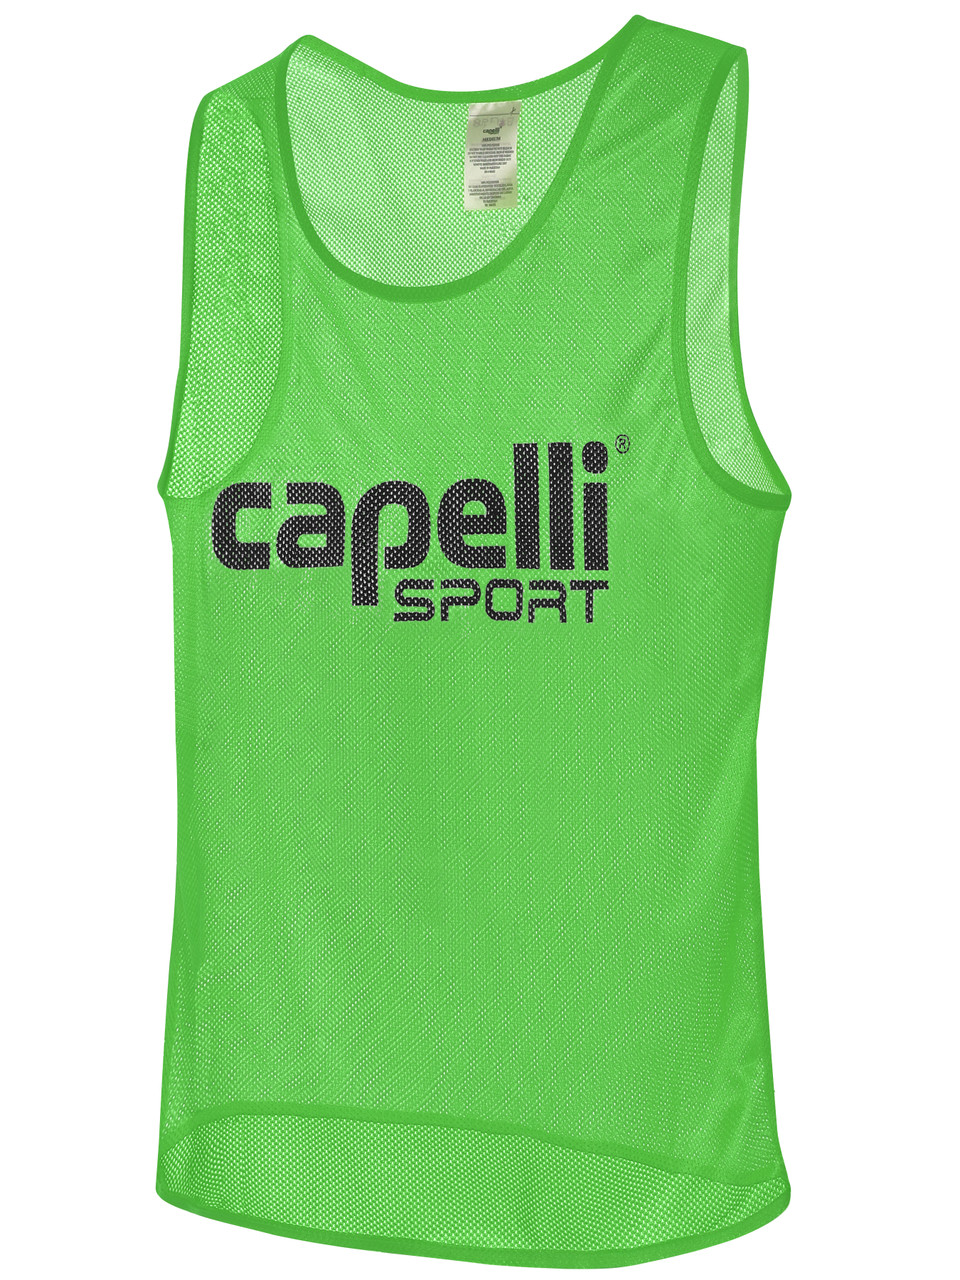 CAPELLI SPORT MESH PINNIES -- POWER GREEN BLACK - Capelli Sport